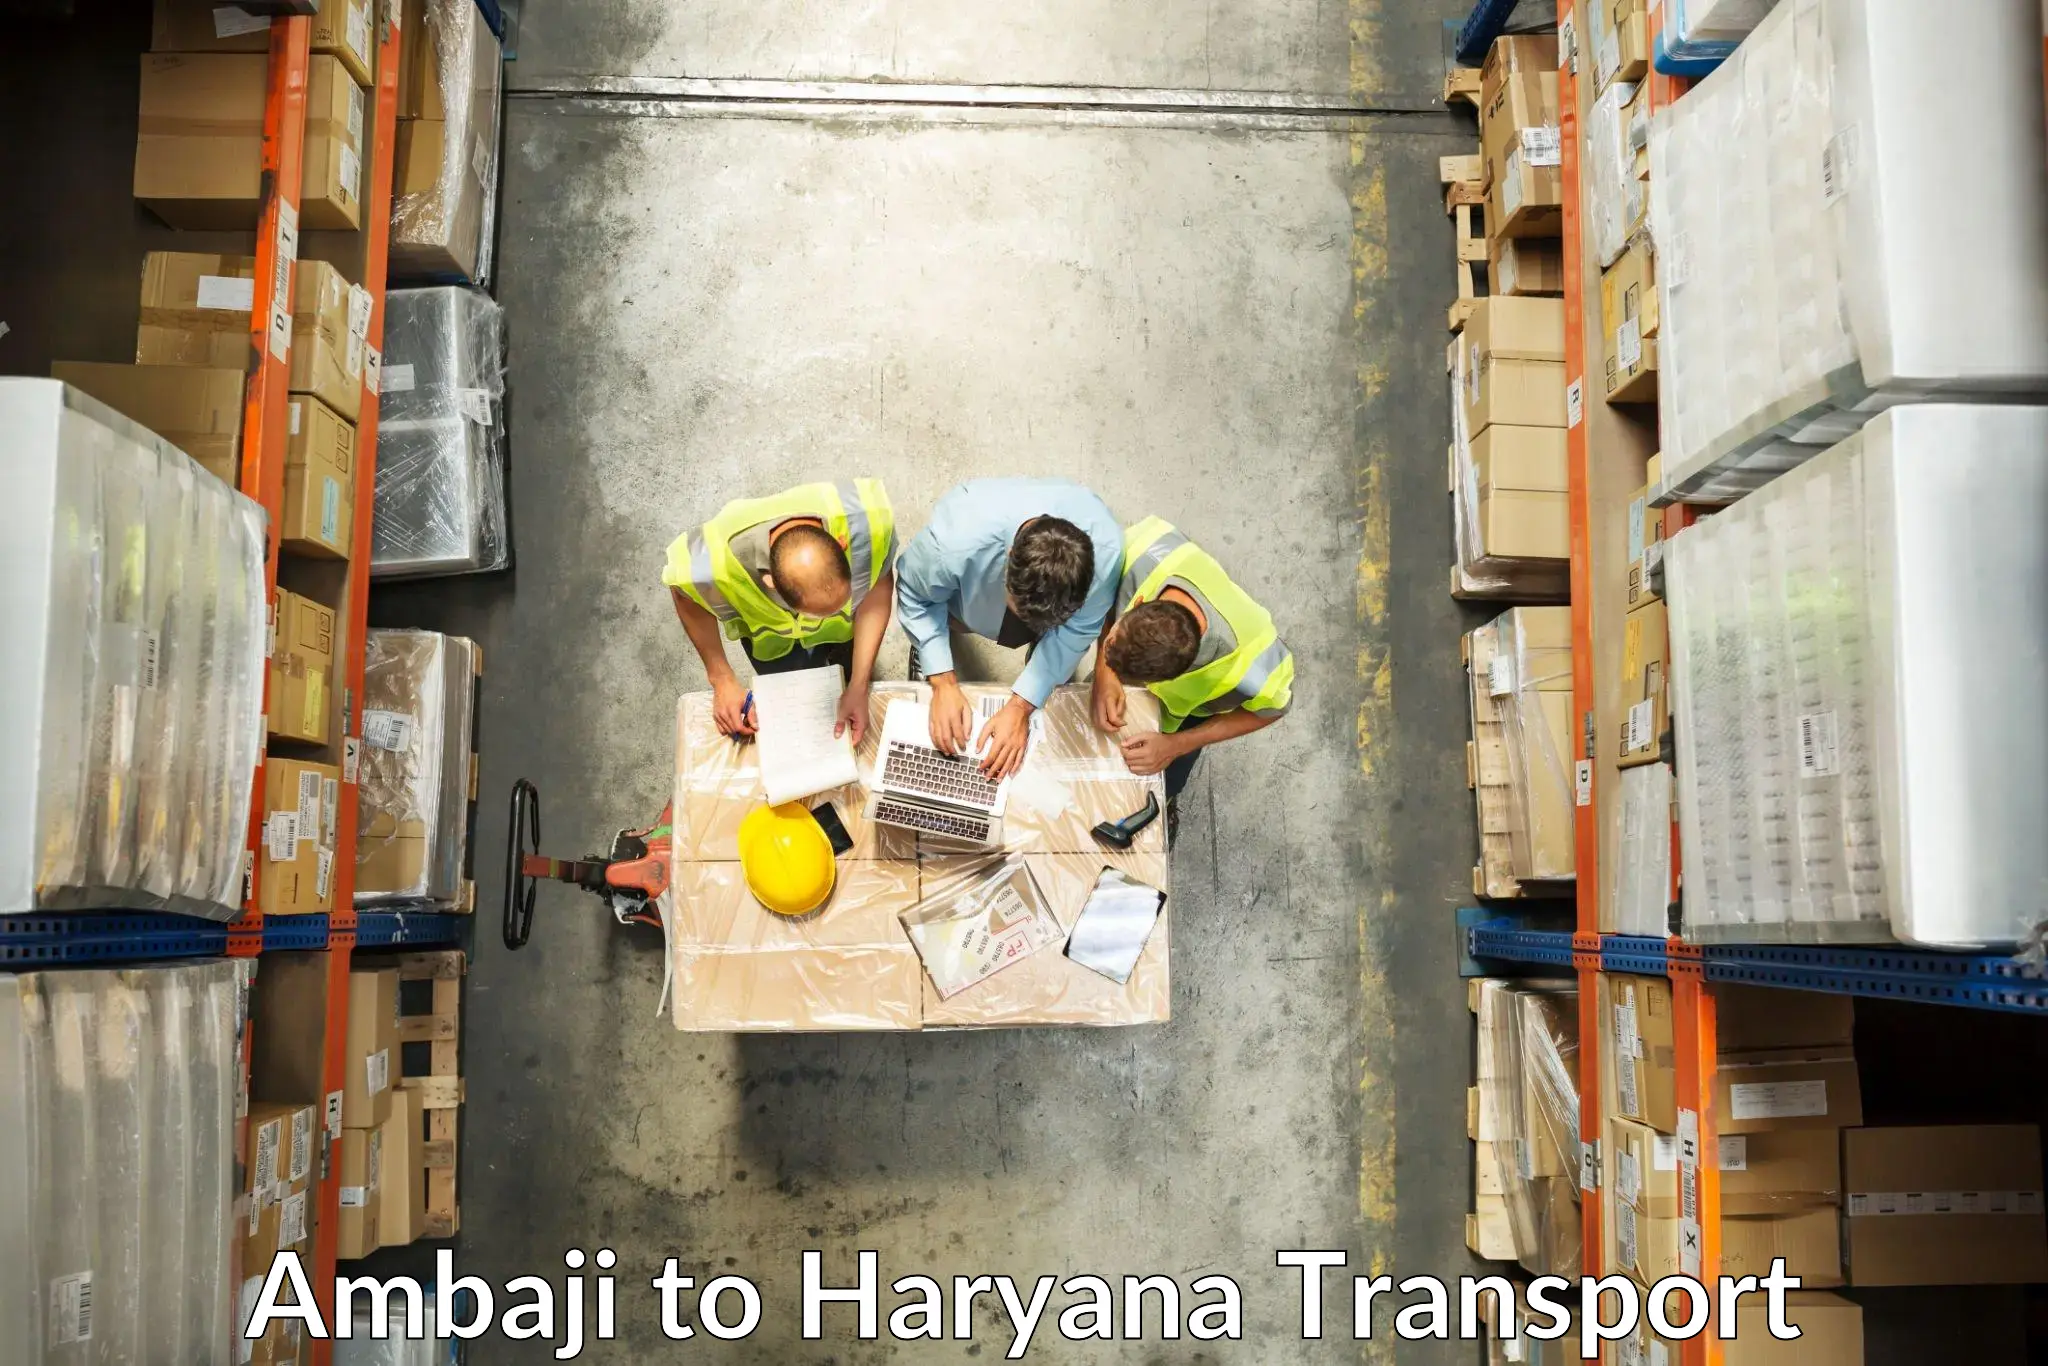 Truck transport companies in India Ambaji to Haryana